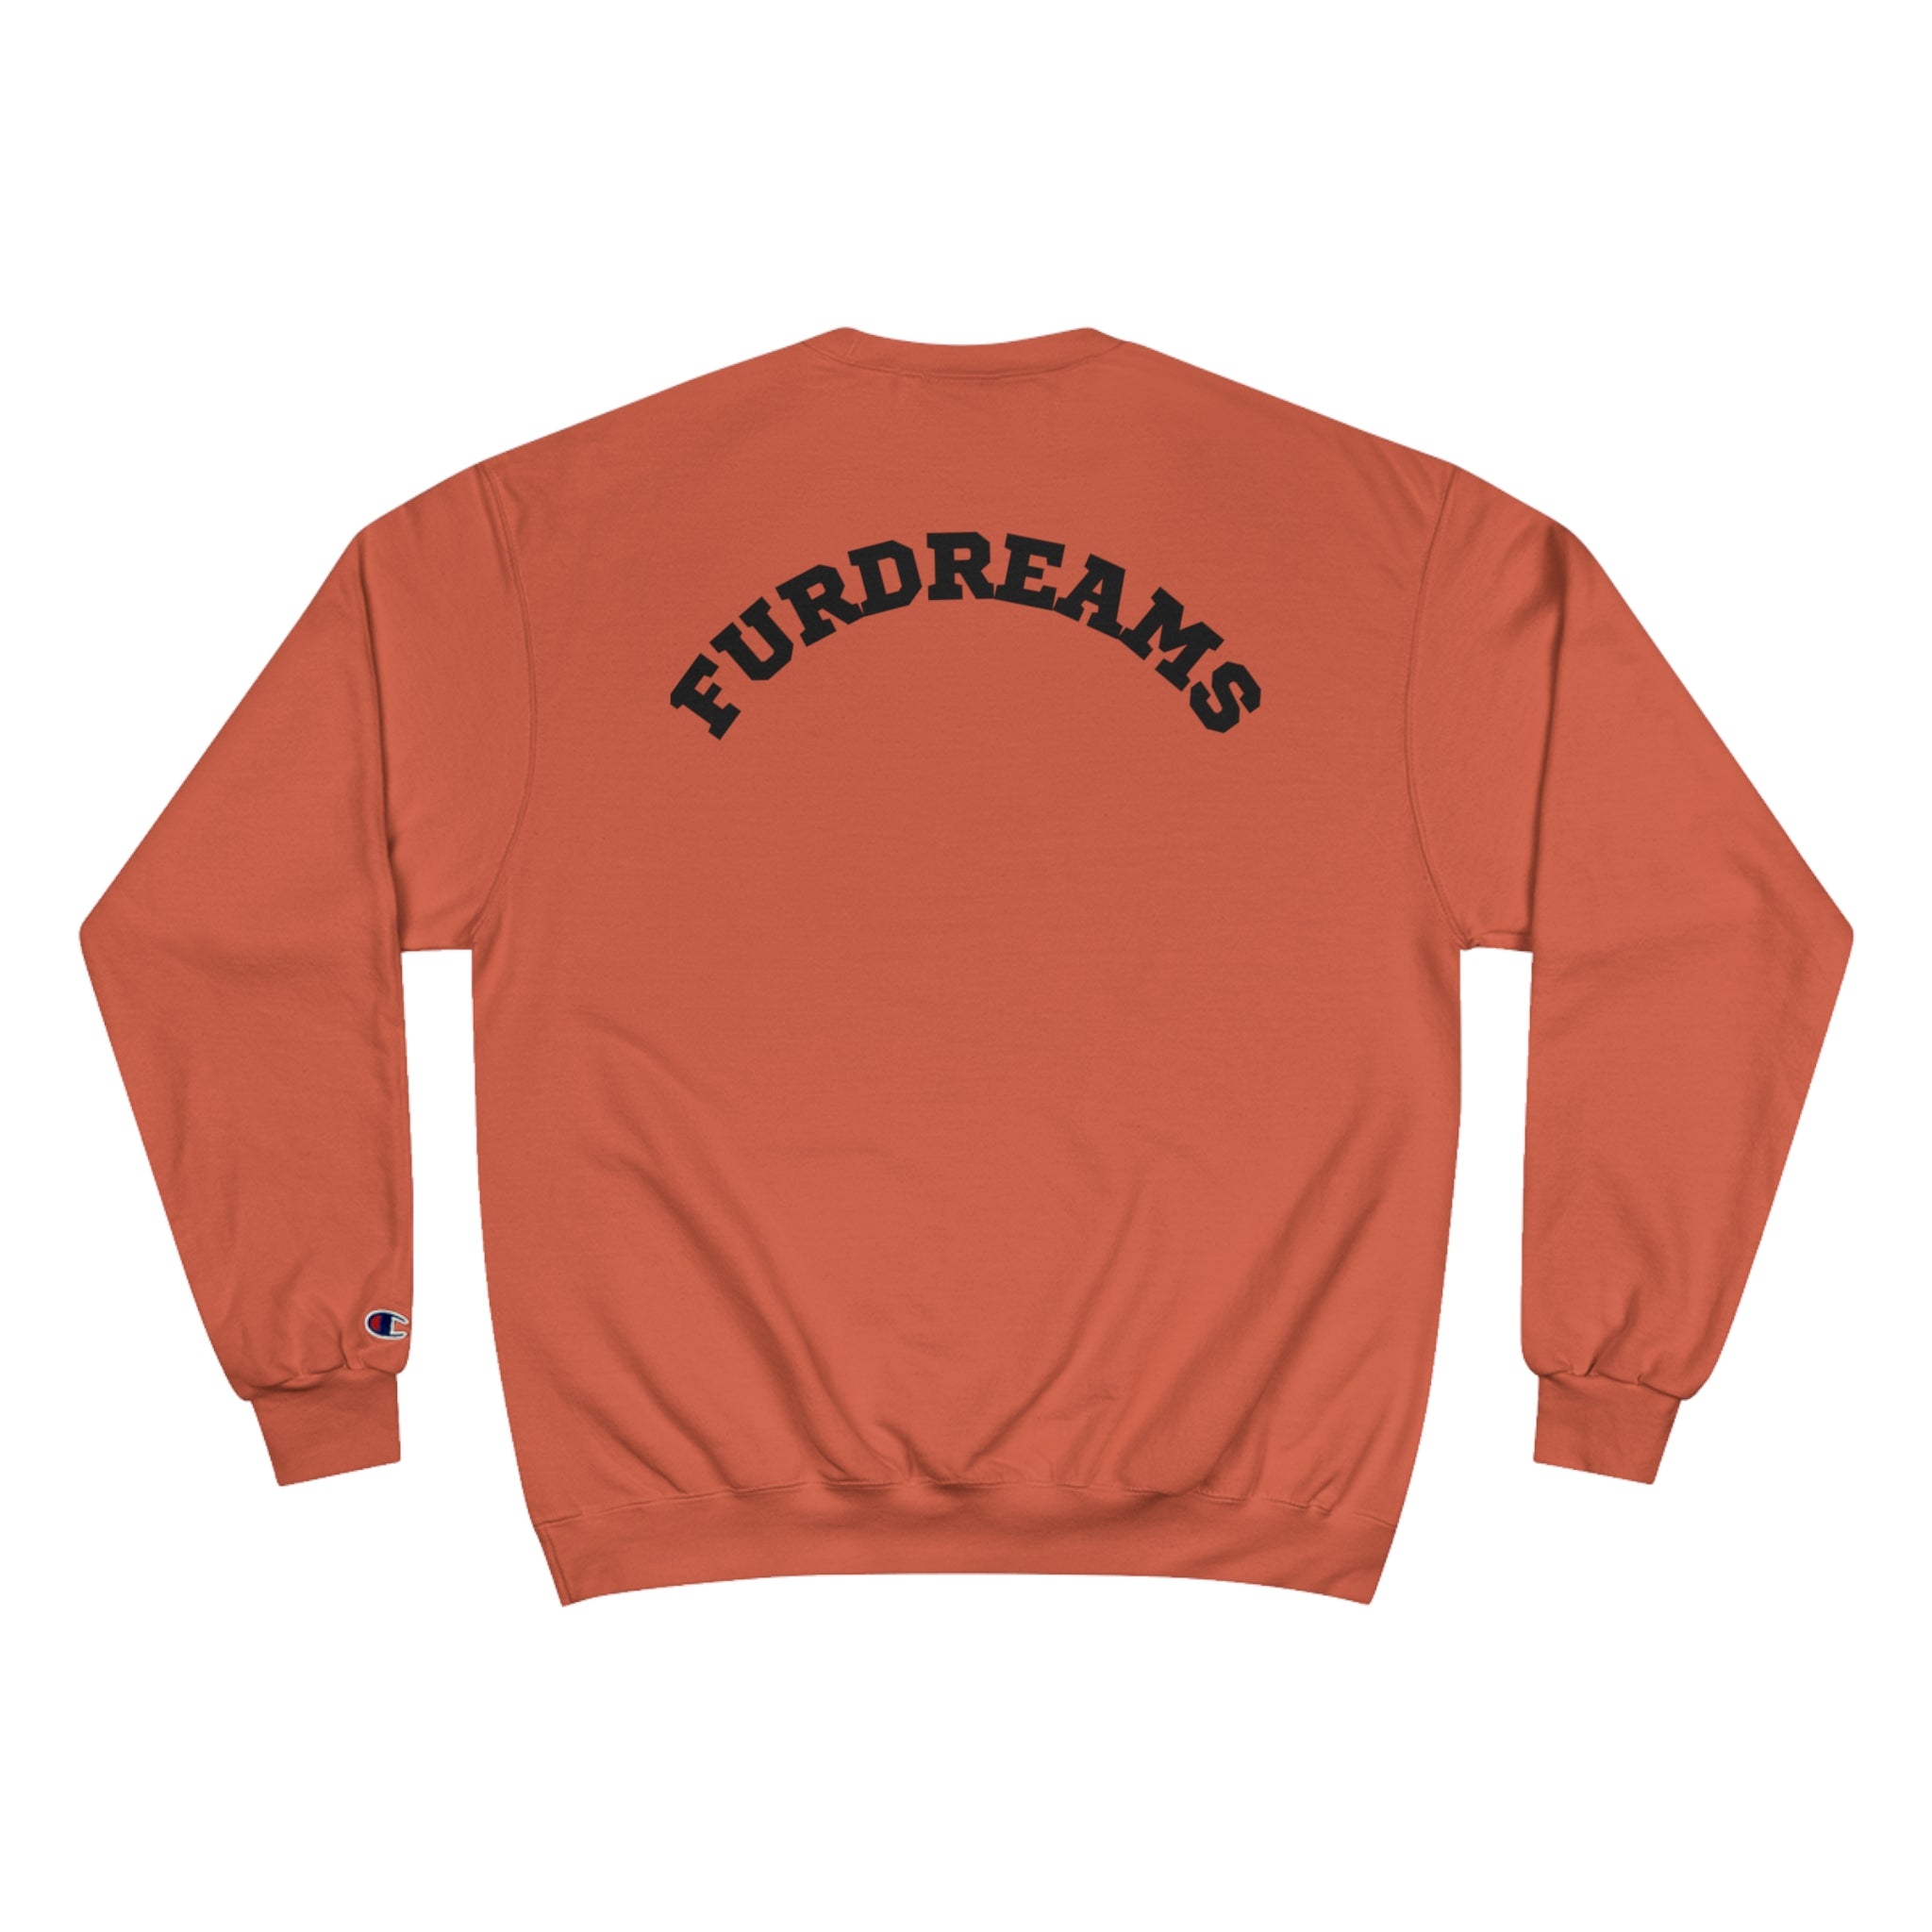 FURDreams “PIT” VI Champion Sweatshirt